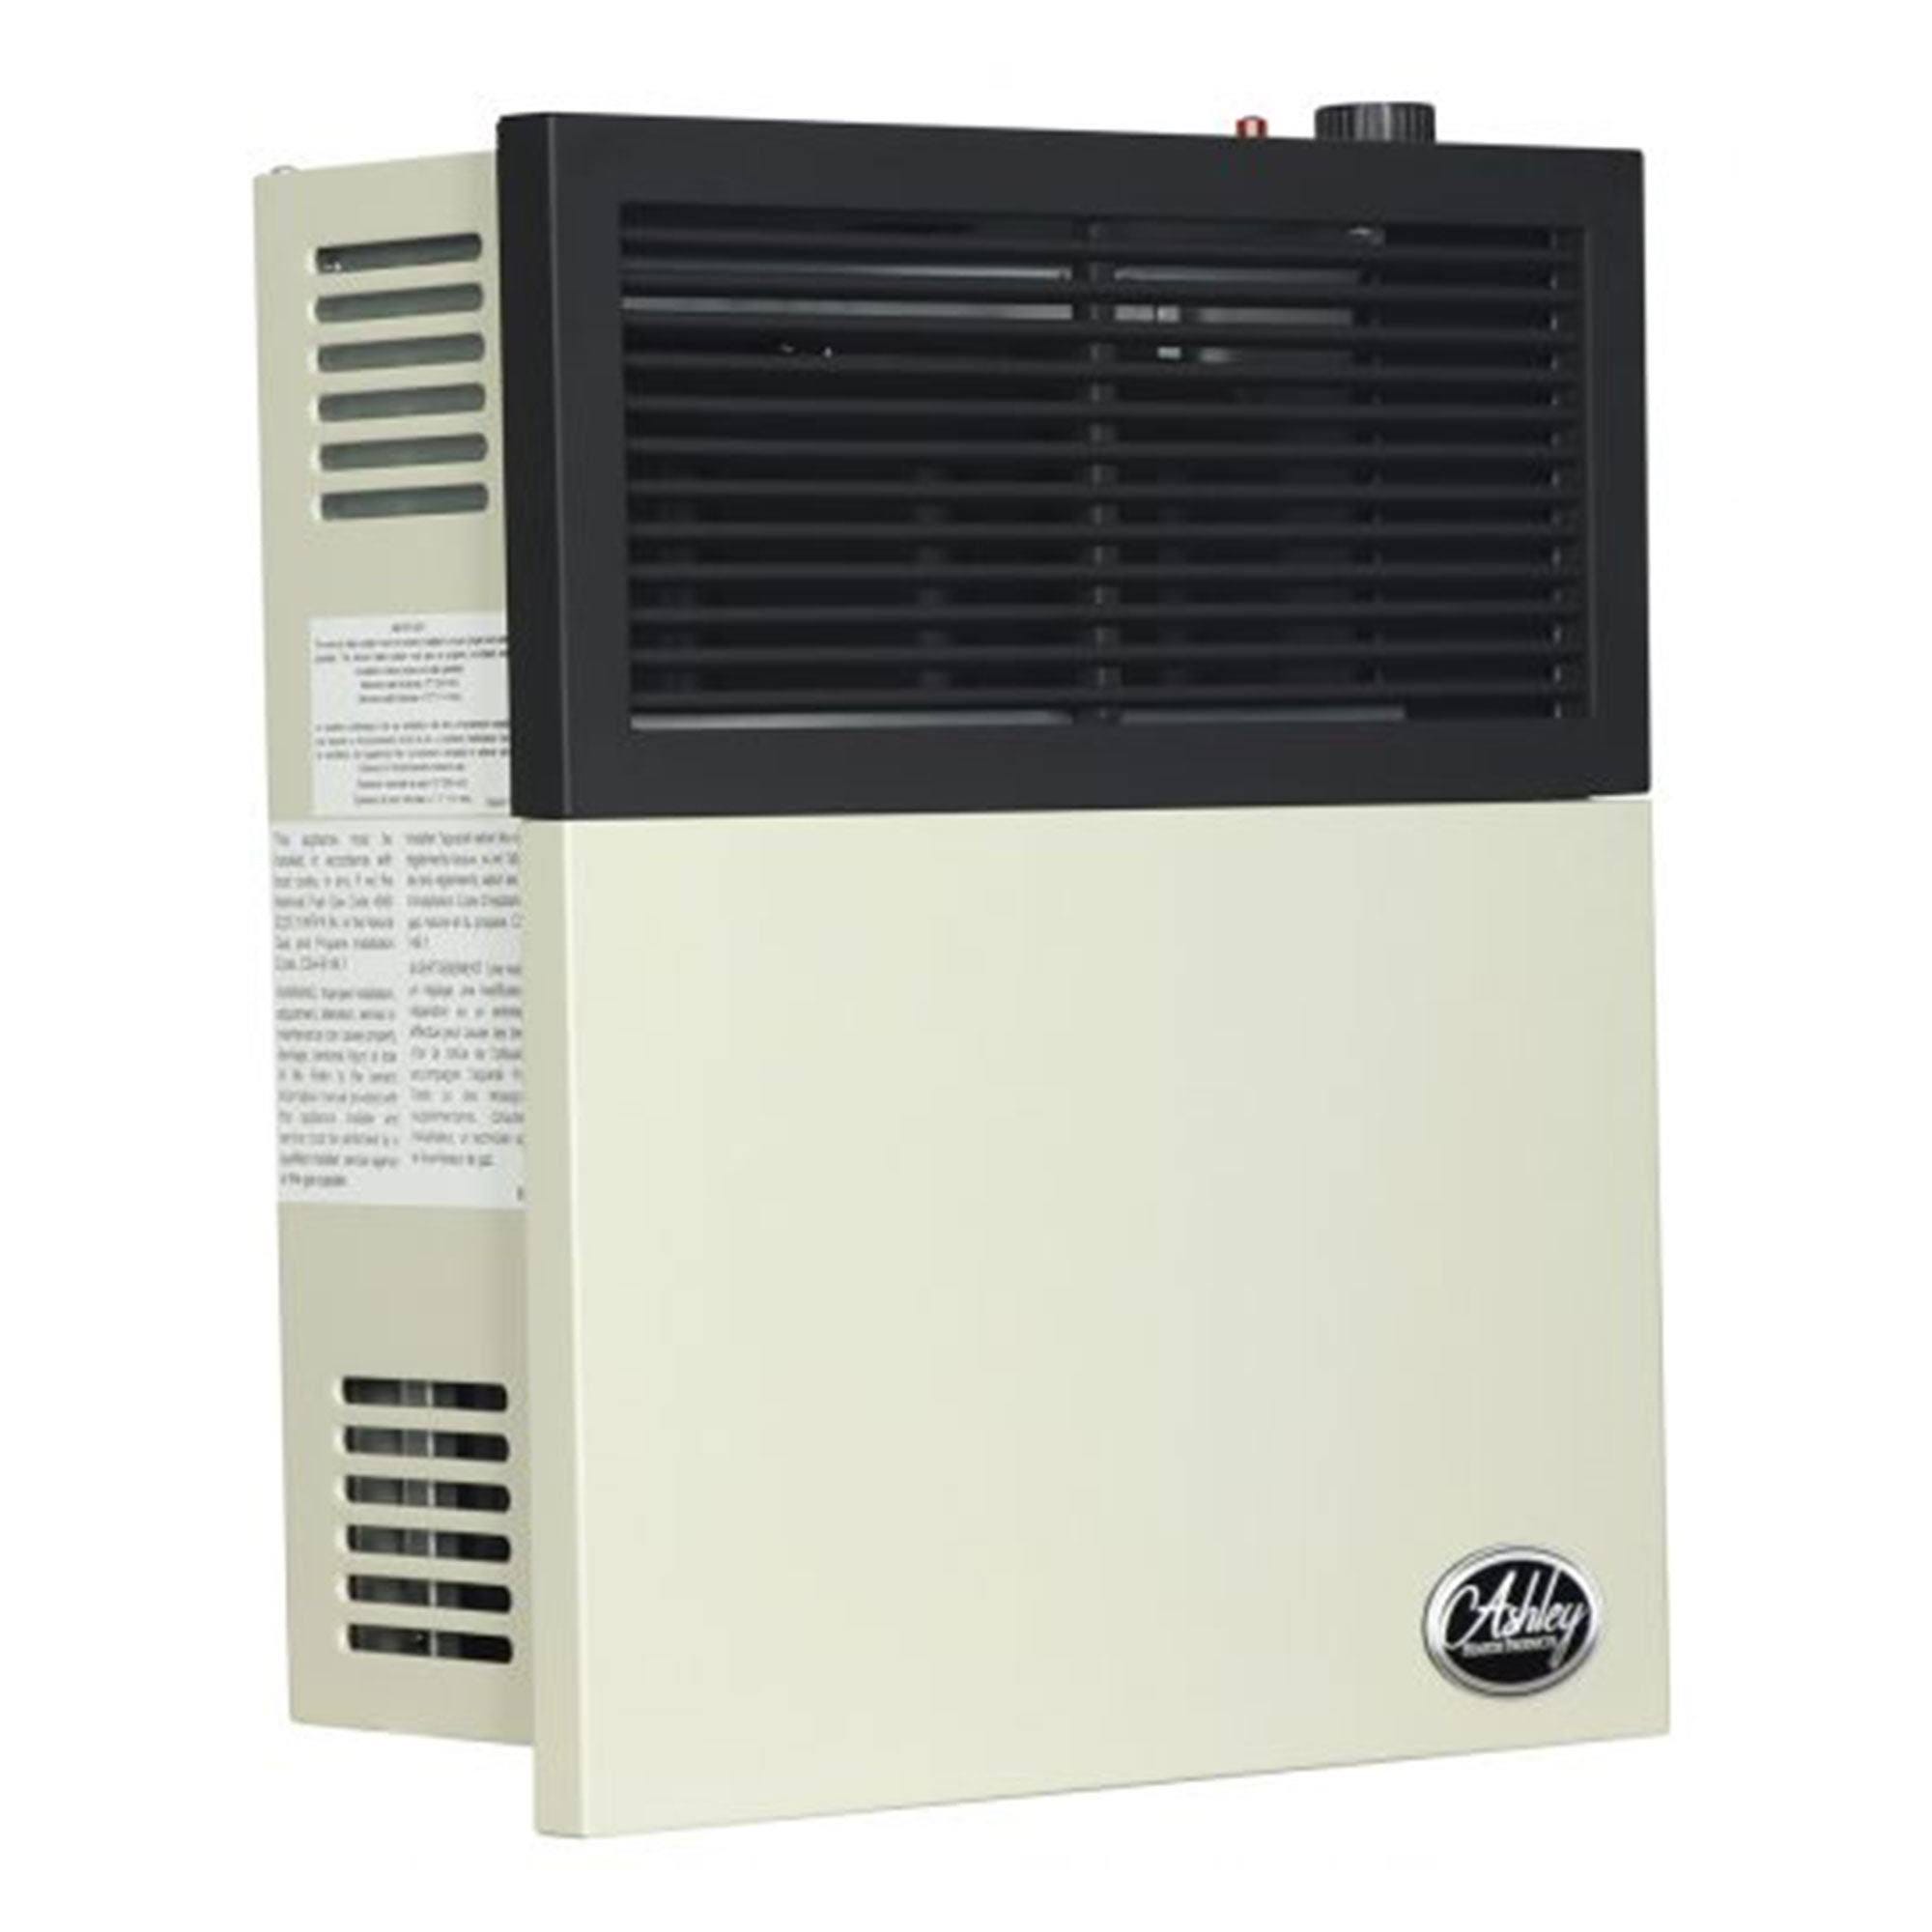 Ashley Hearth Products - Efficient 11,000 BTU Propane Heater | Image